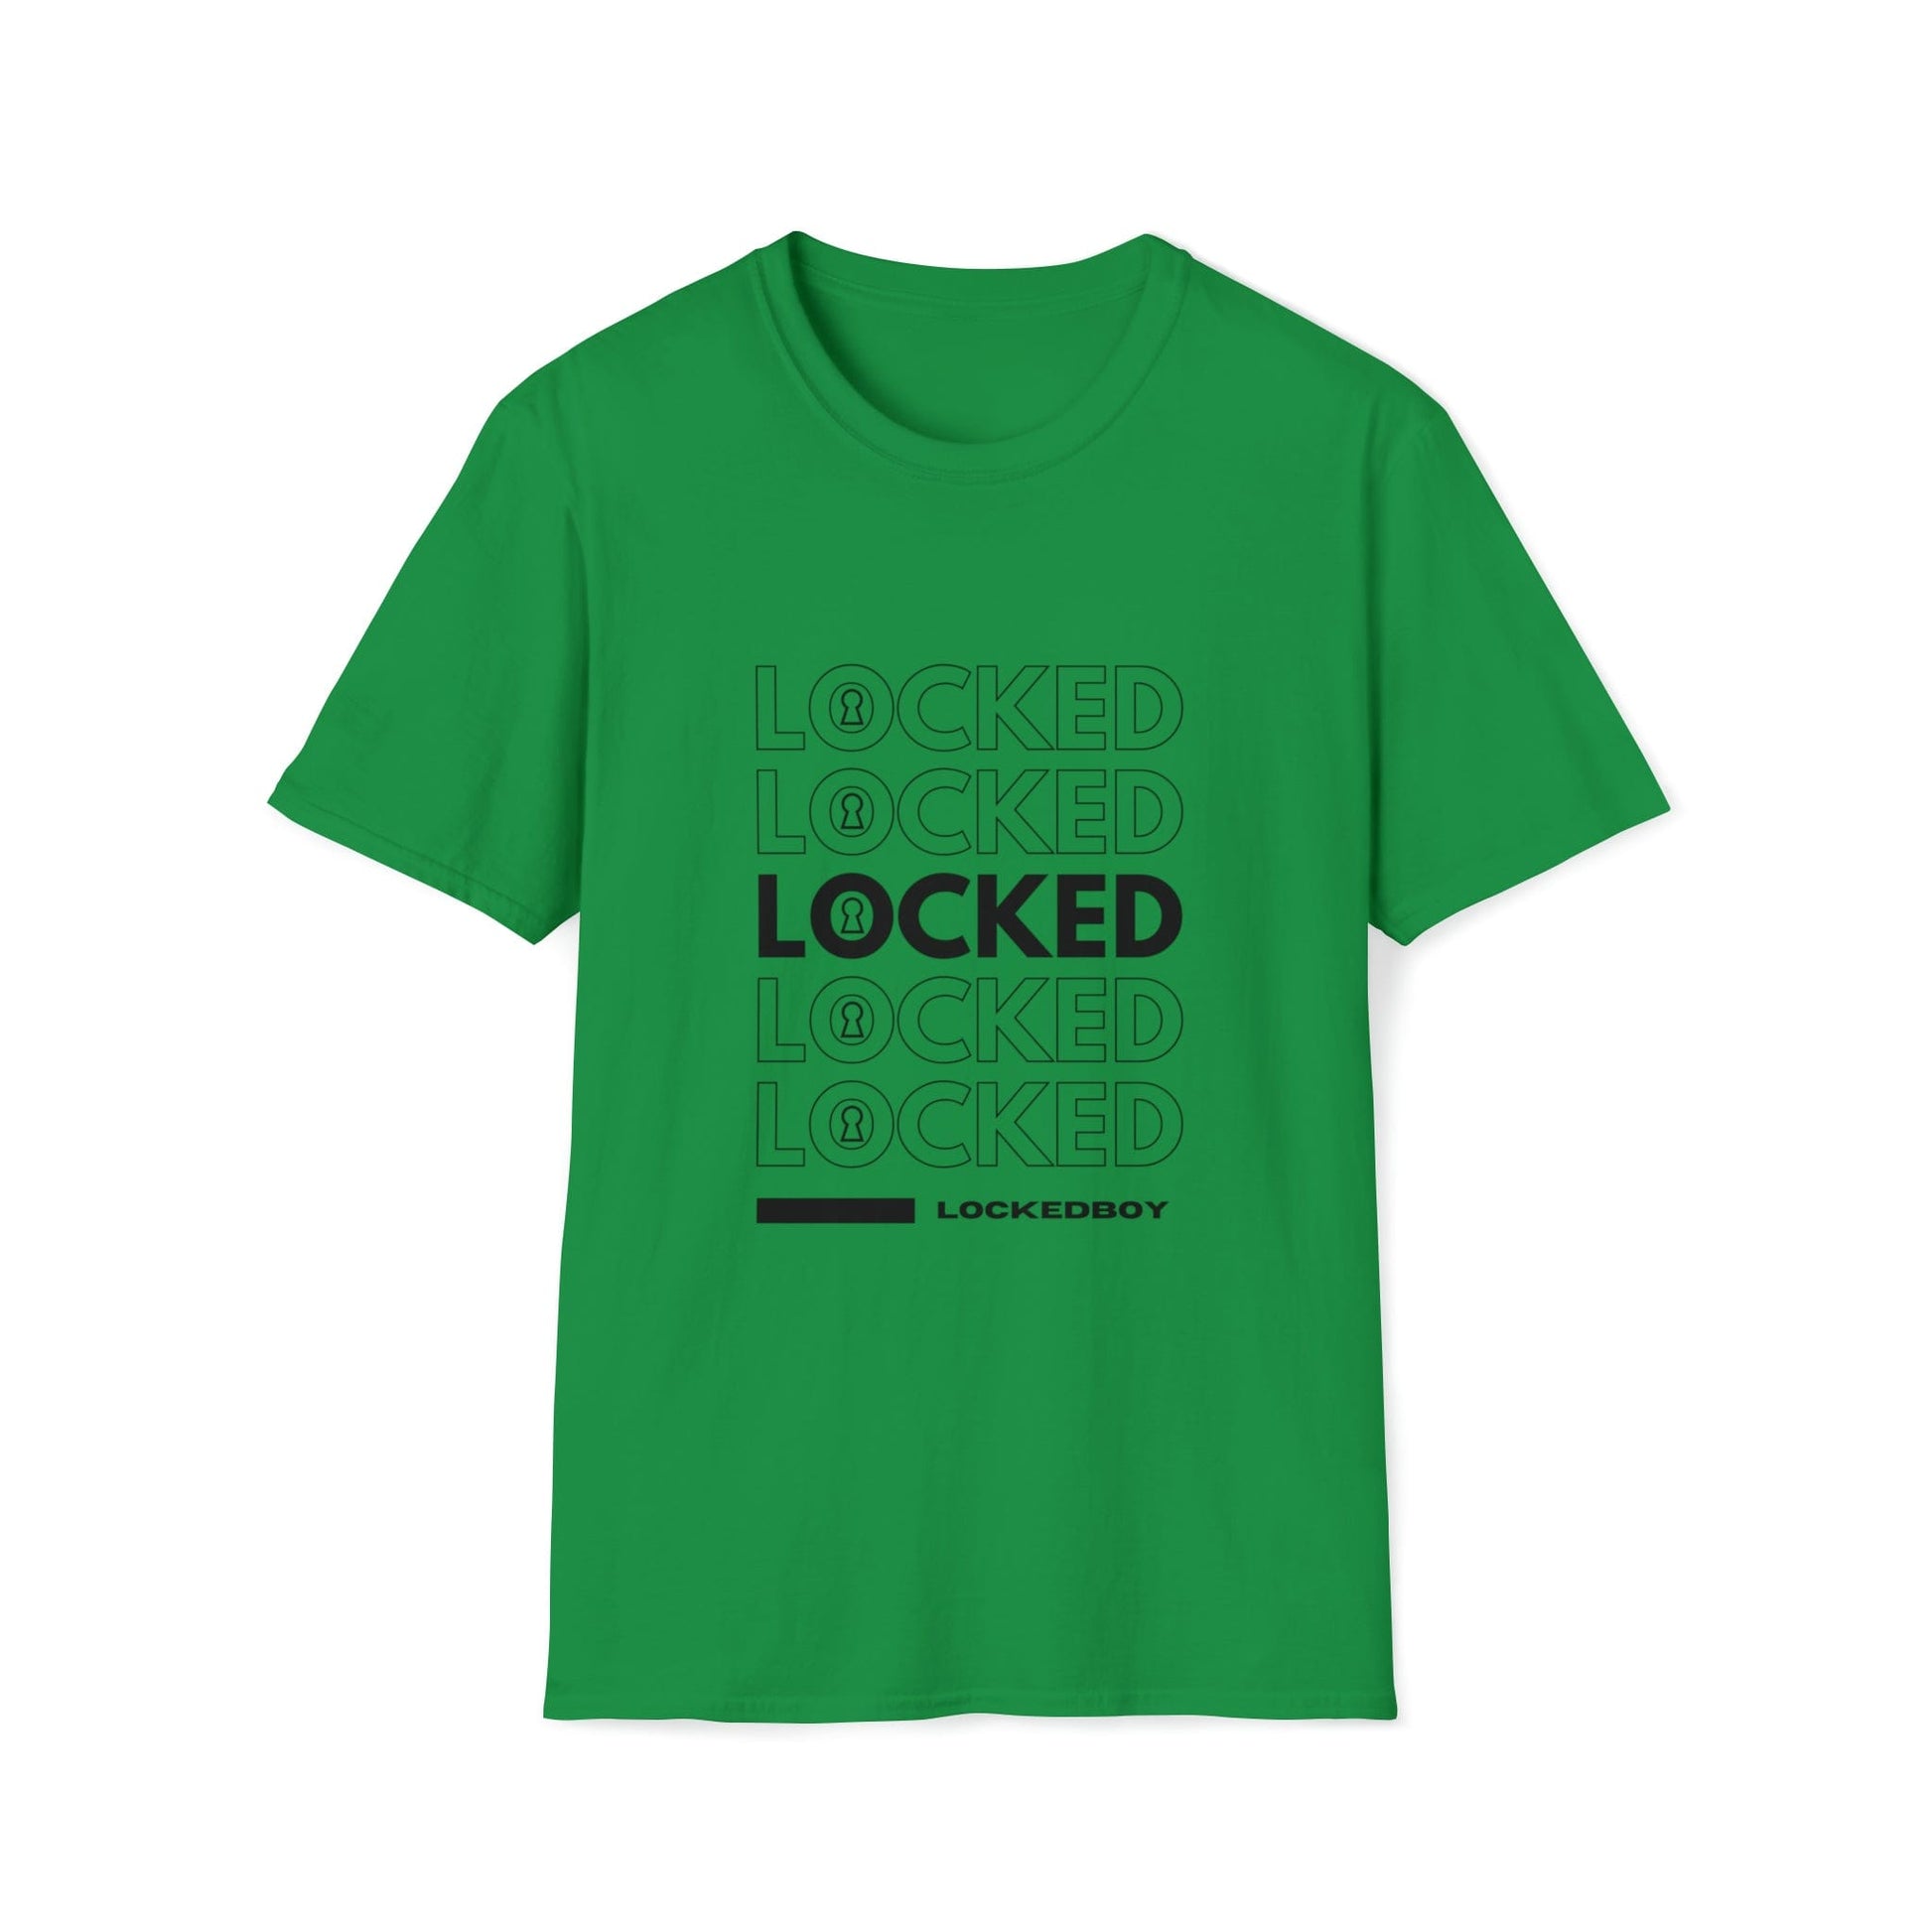 T-Shirt Irish Green / S LOCKED Inspo (black text) - Chastity Shirts by LockedBoy Athletics LEATHERDADDY BATOR